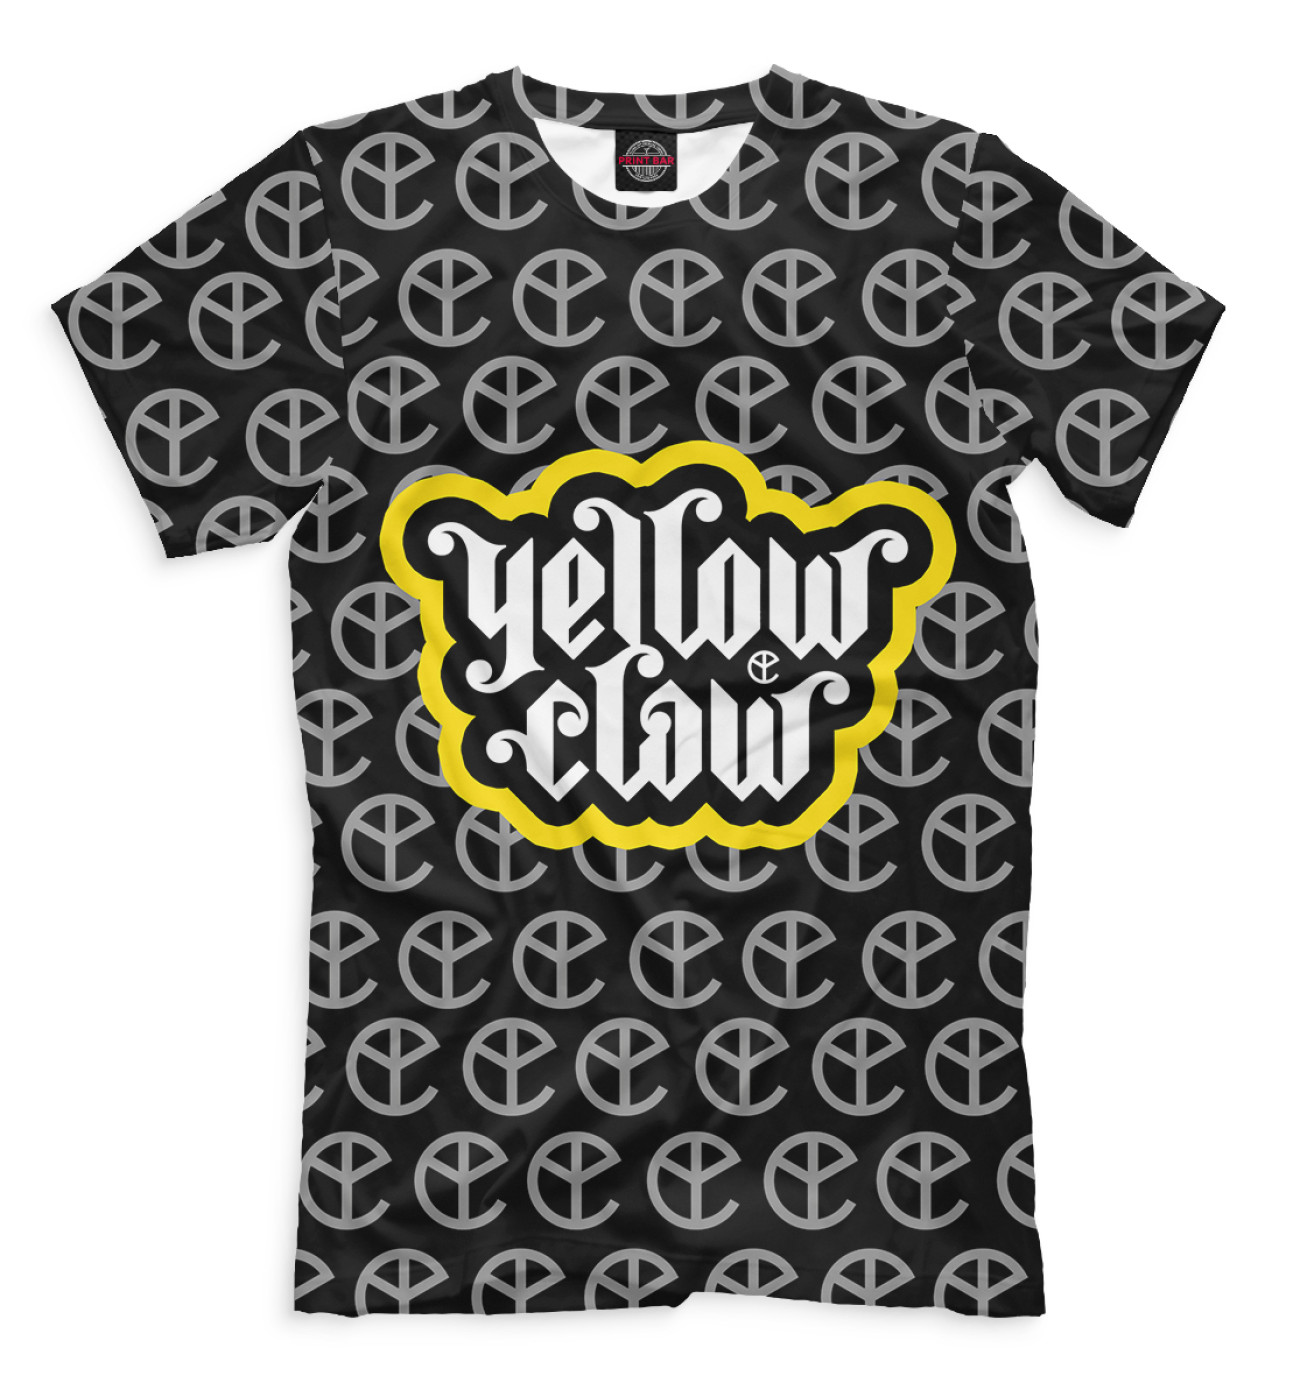 Мужская Футболка Yellow Claw, артикул: YLW-764853-fut-2